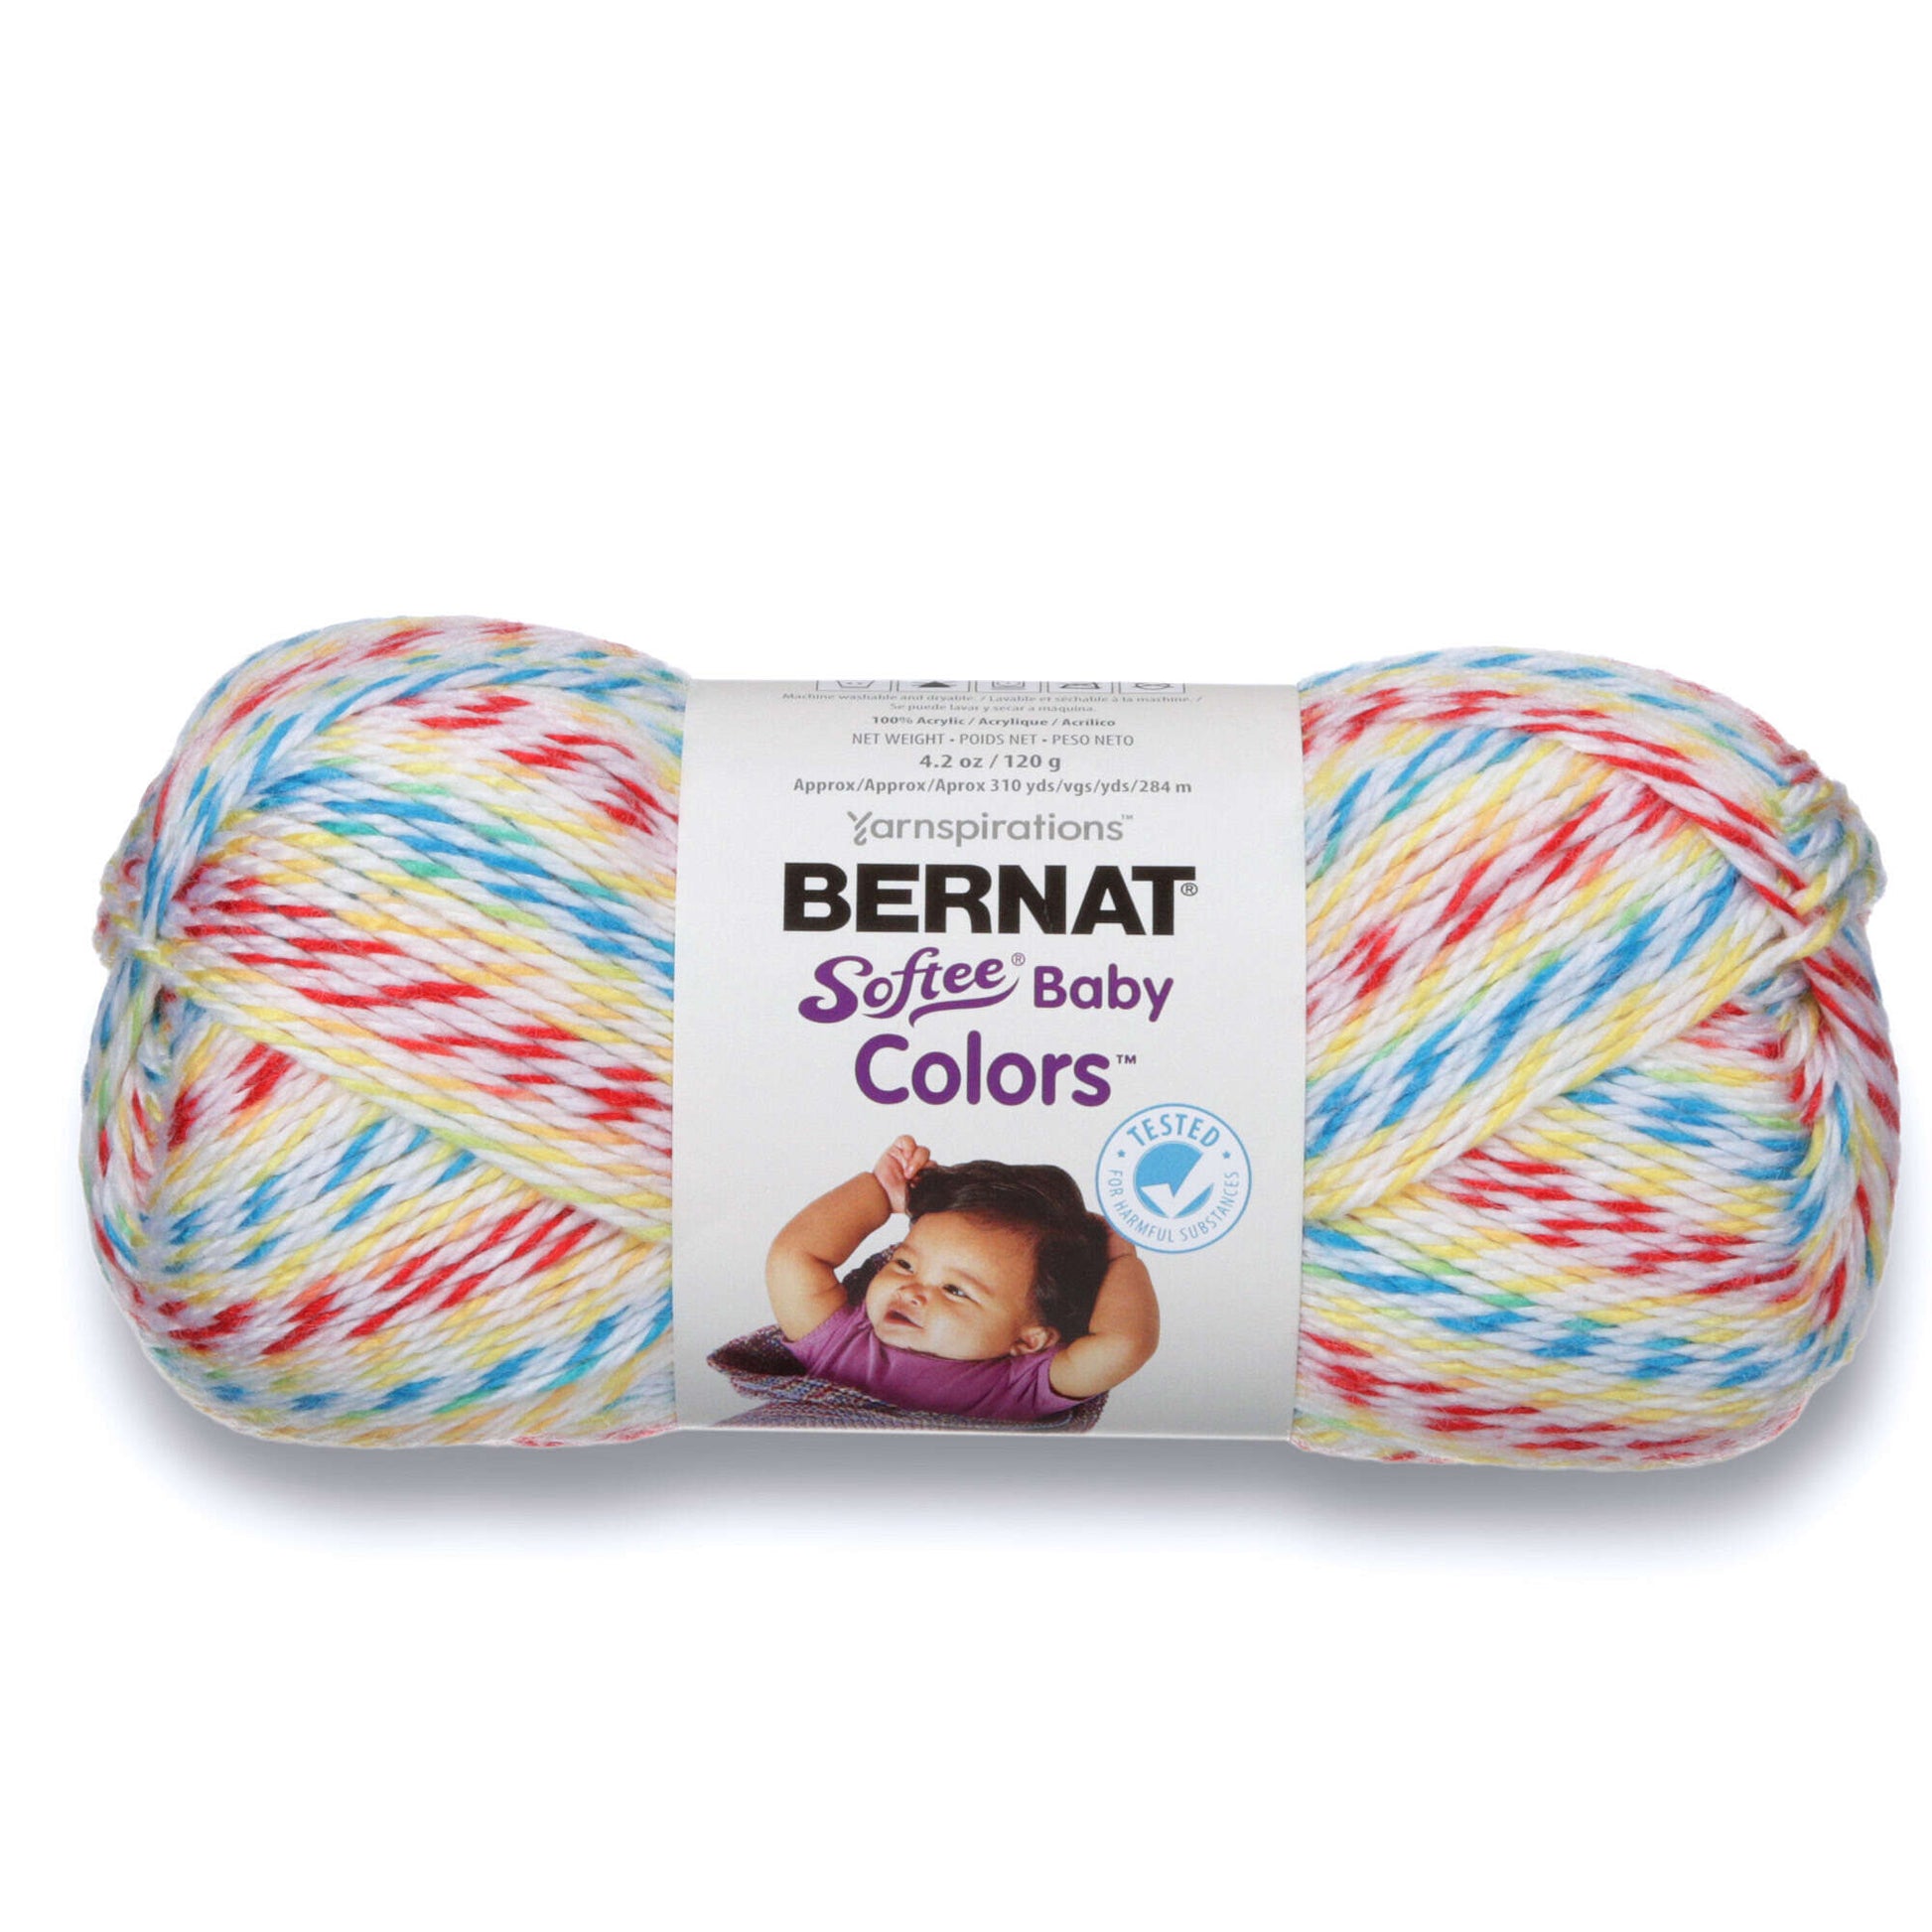 Bernat Softee Baby Colors Yarn - Discontinued Shades White Rainbow